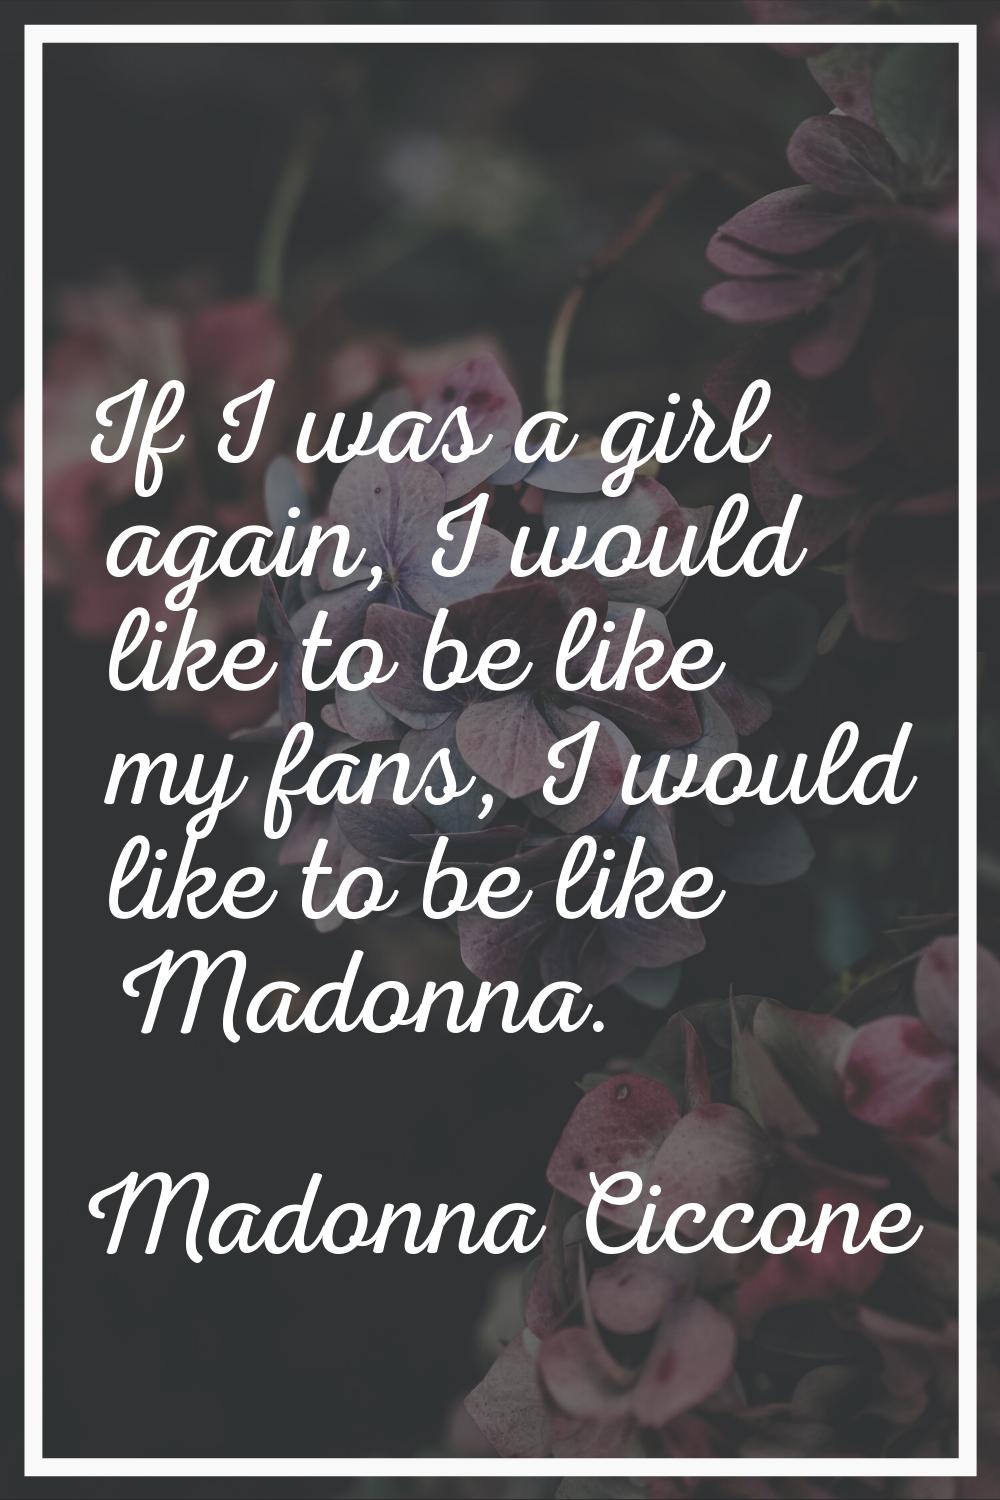 If I was a girl again, I would like to be like my fans, I would like to be like Madonna.